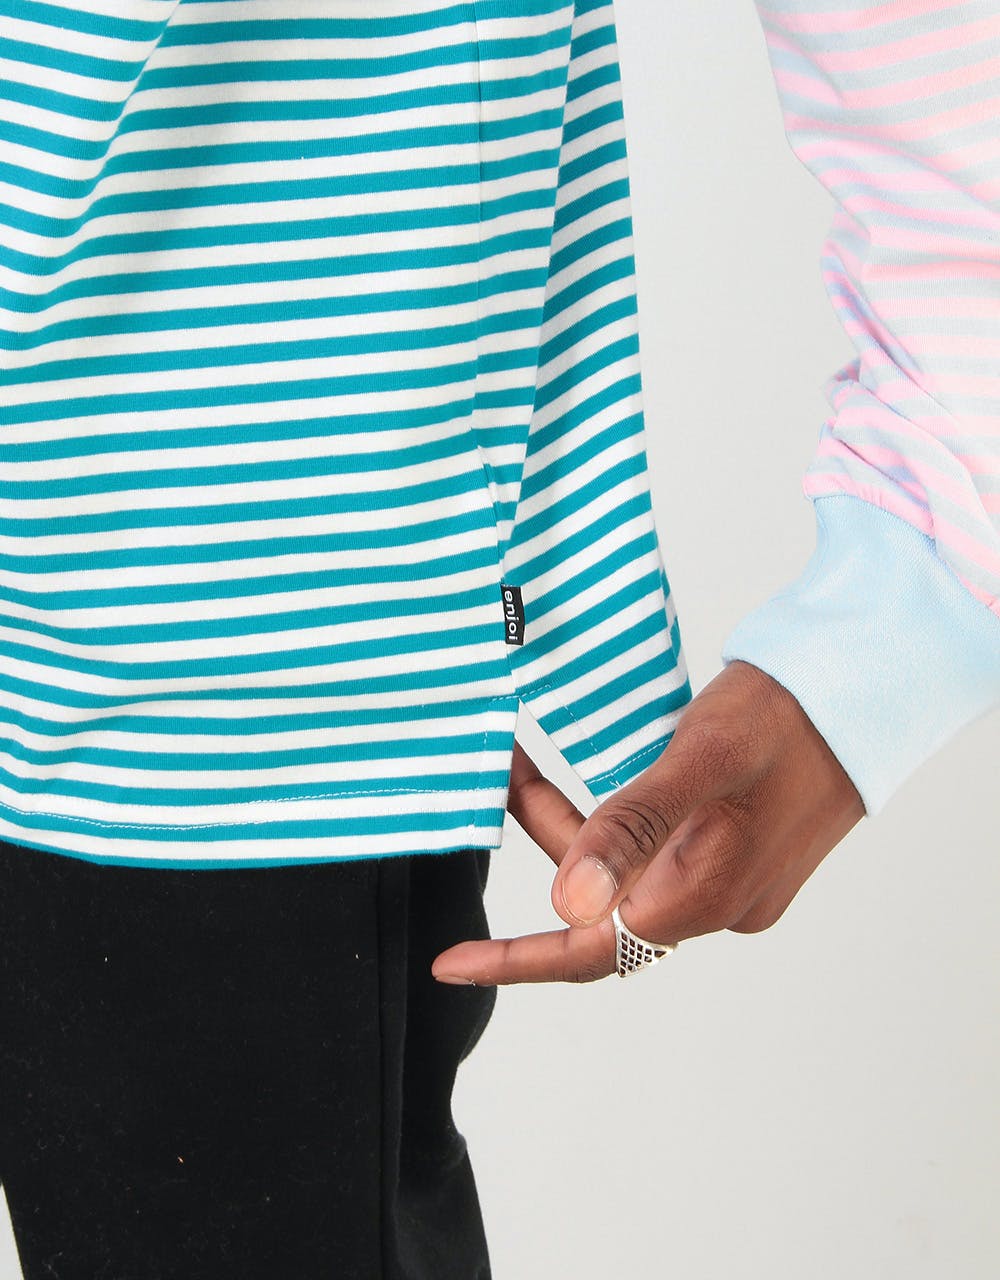 Enjoi Confused Stripe L/S Polo Shirt - Pastel